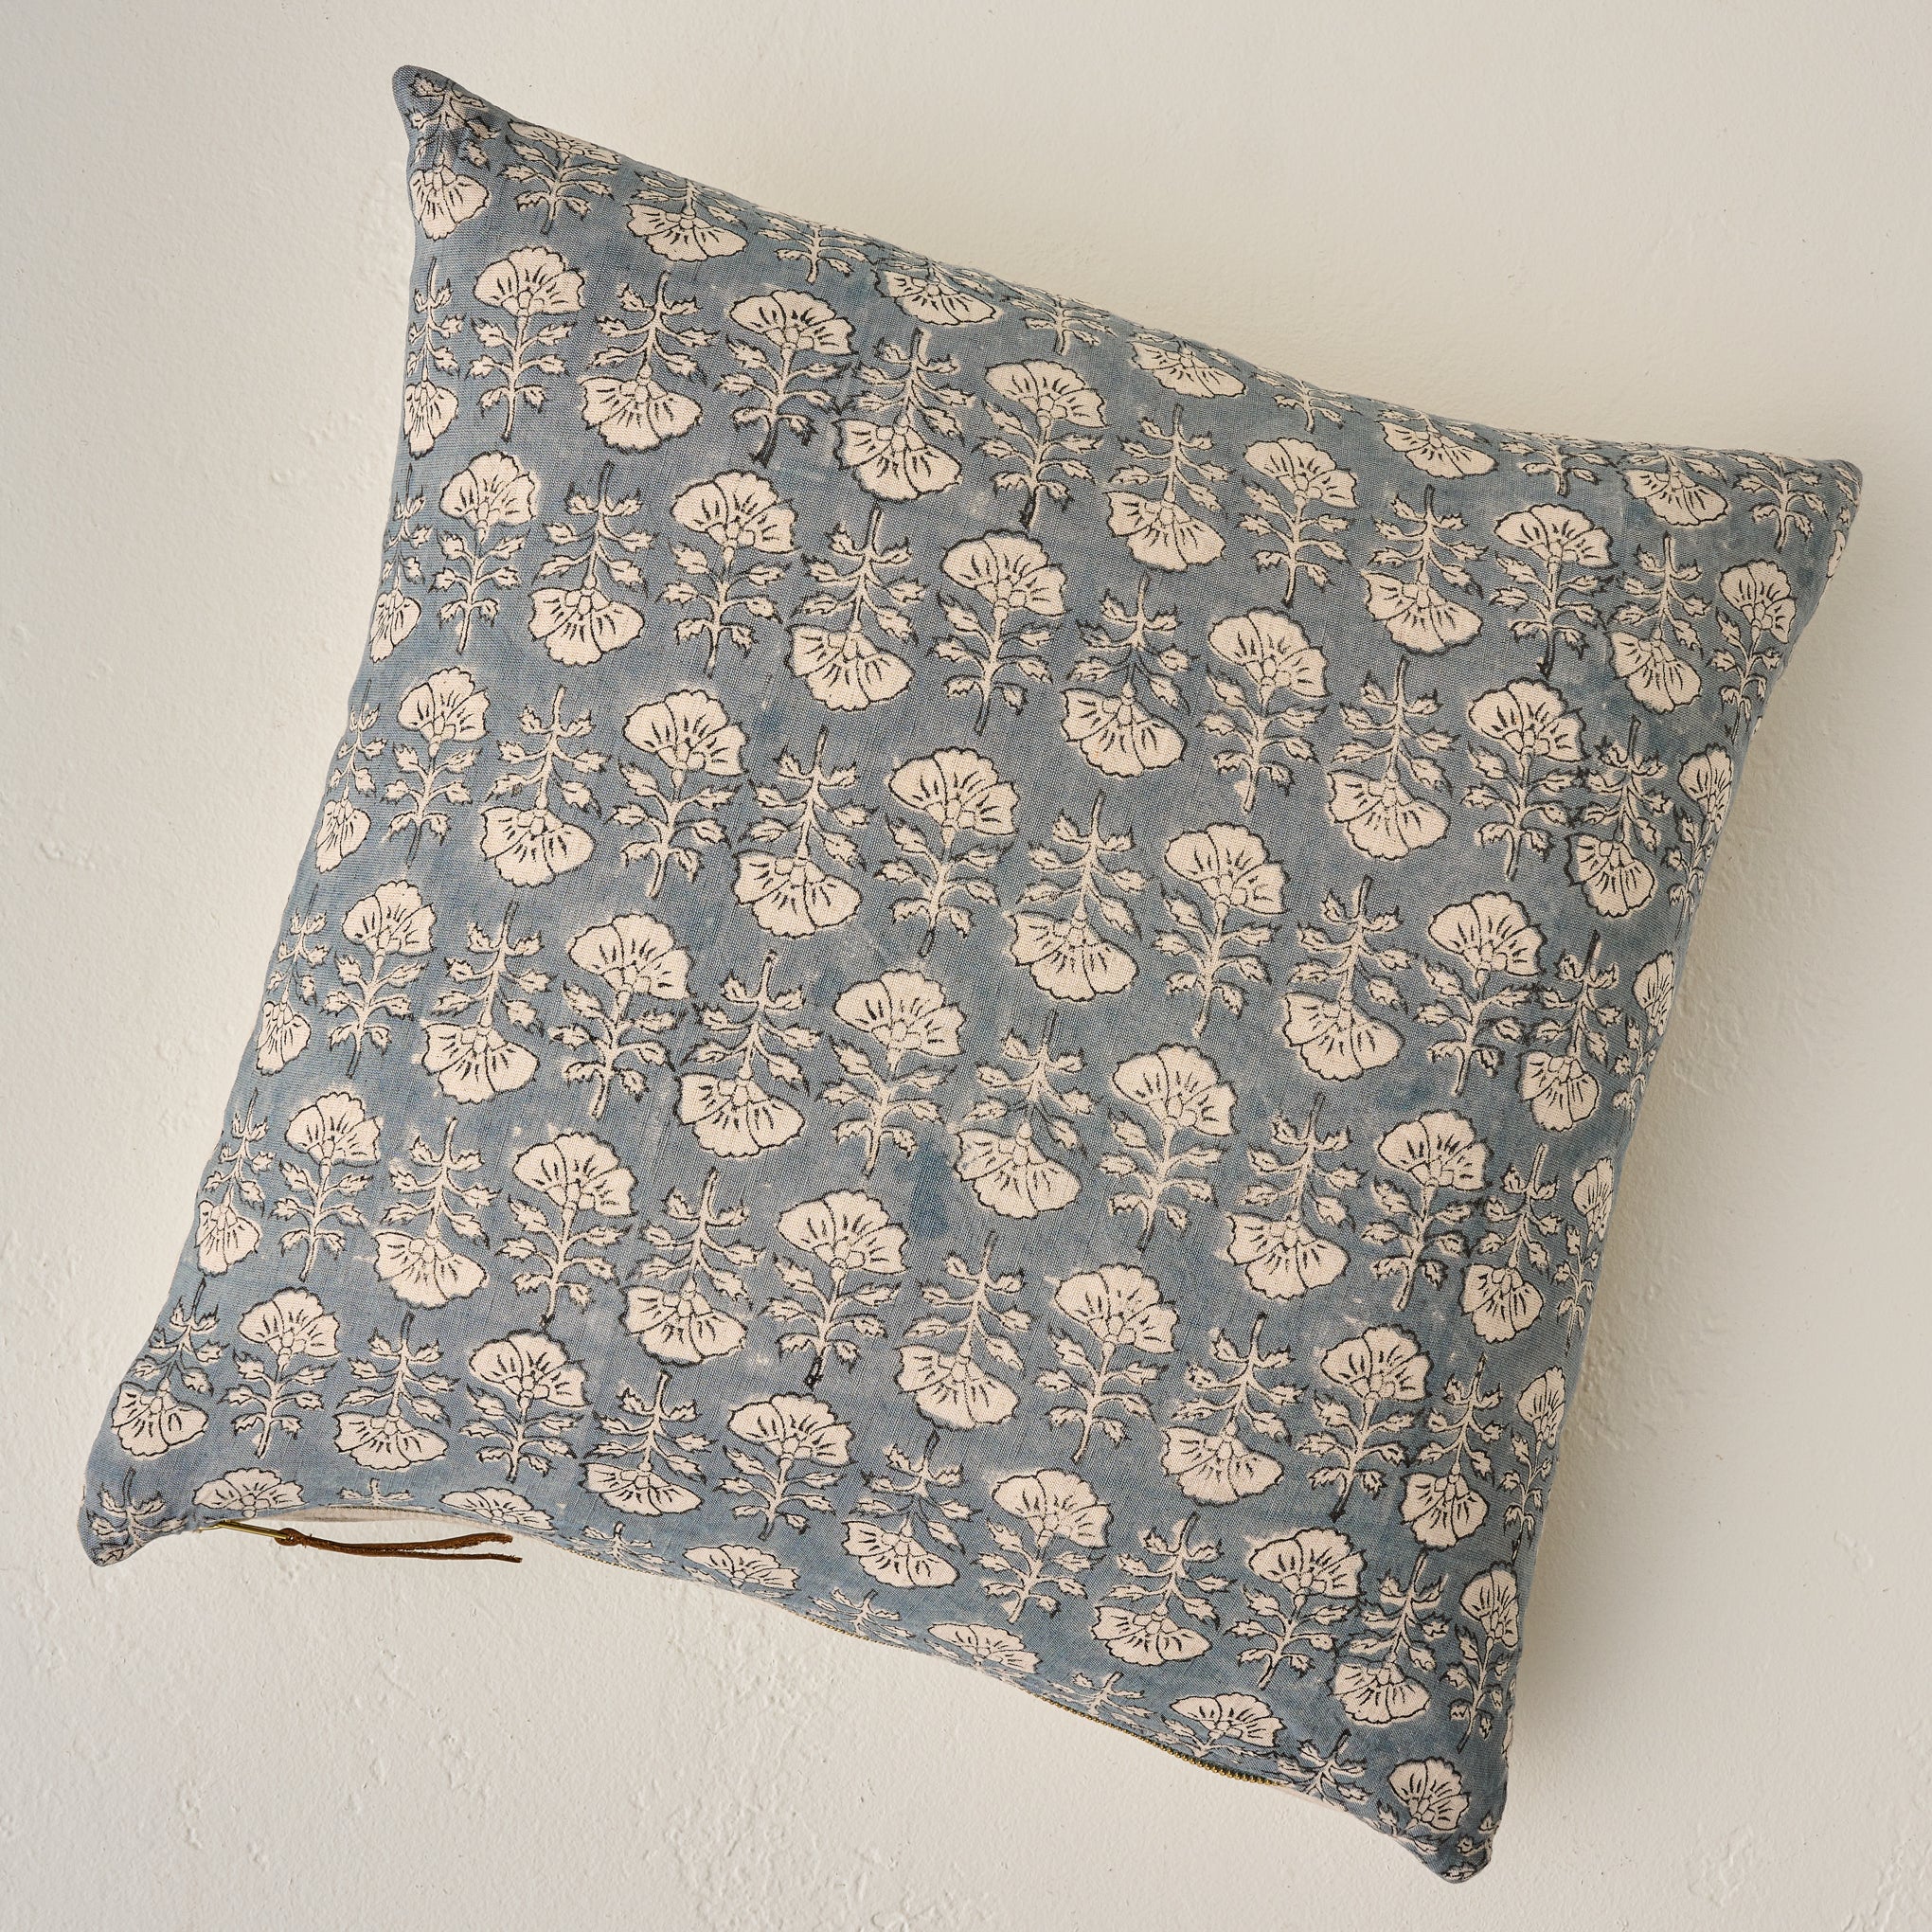 Black floral needlepoint pillow w/ cord trim, 14x14